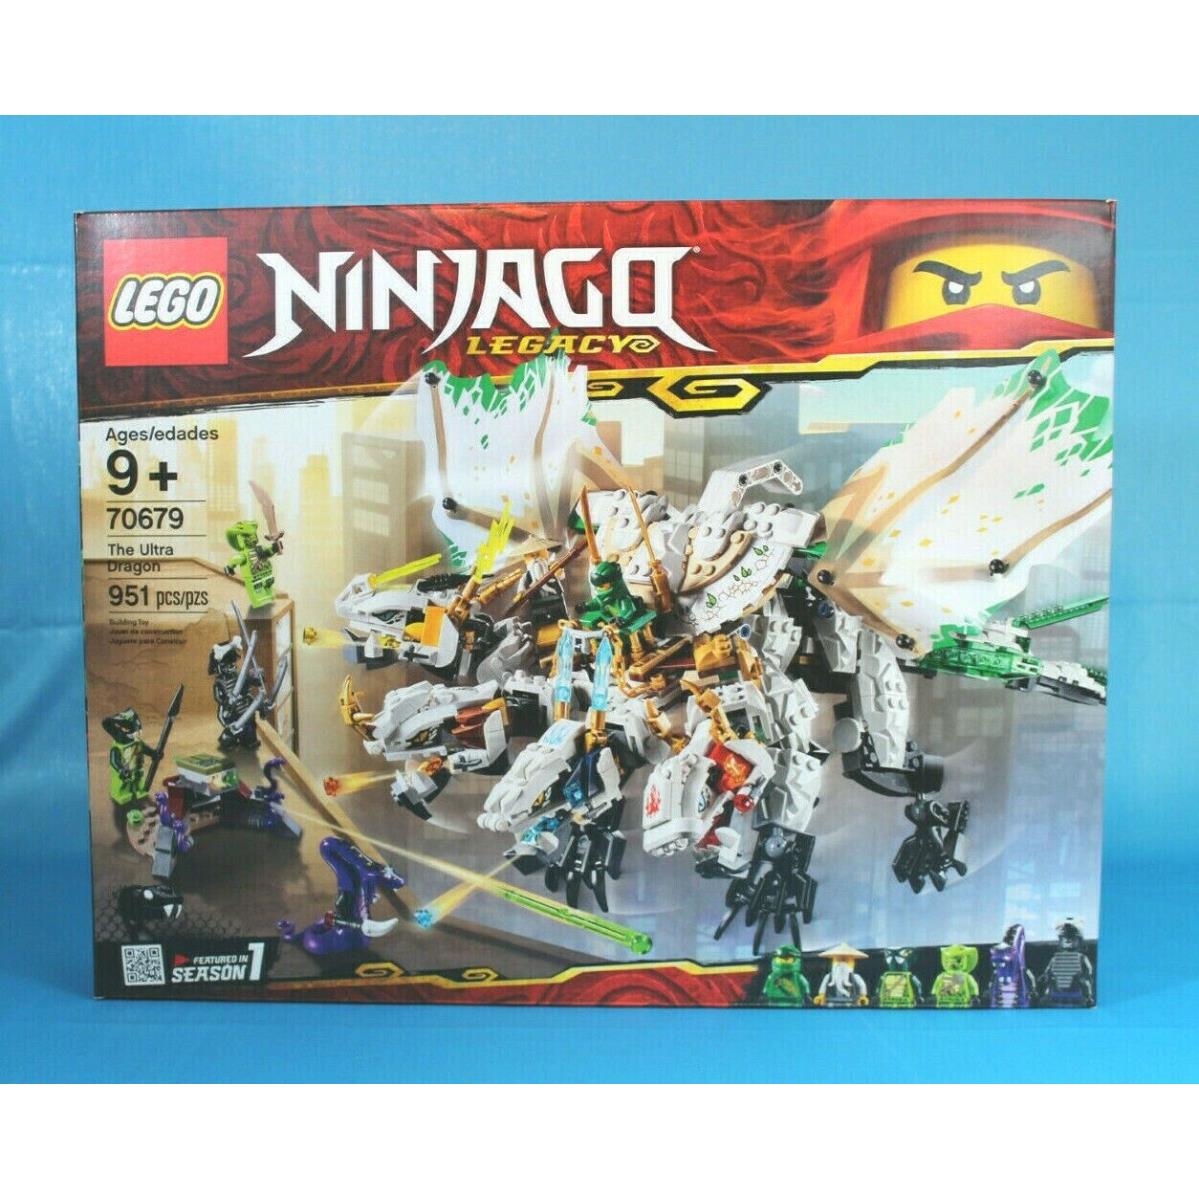 Lego Ninjago Legacy 70679 The Ultra Dragon Retired 2018